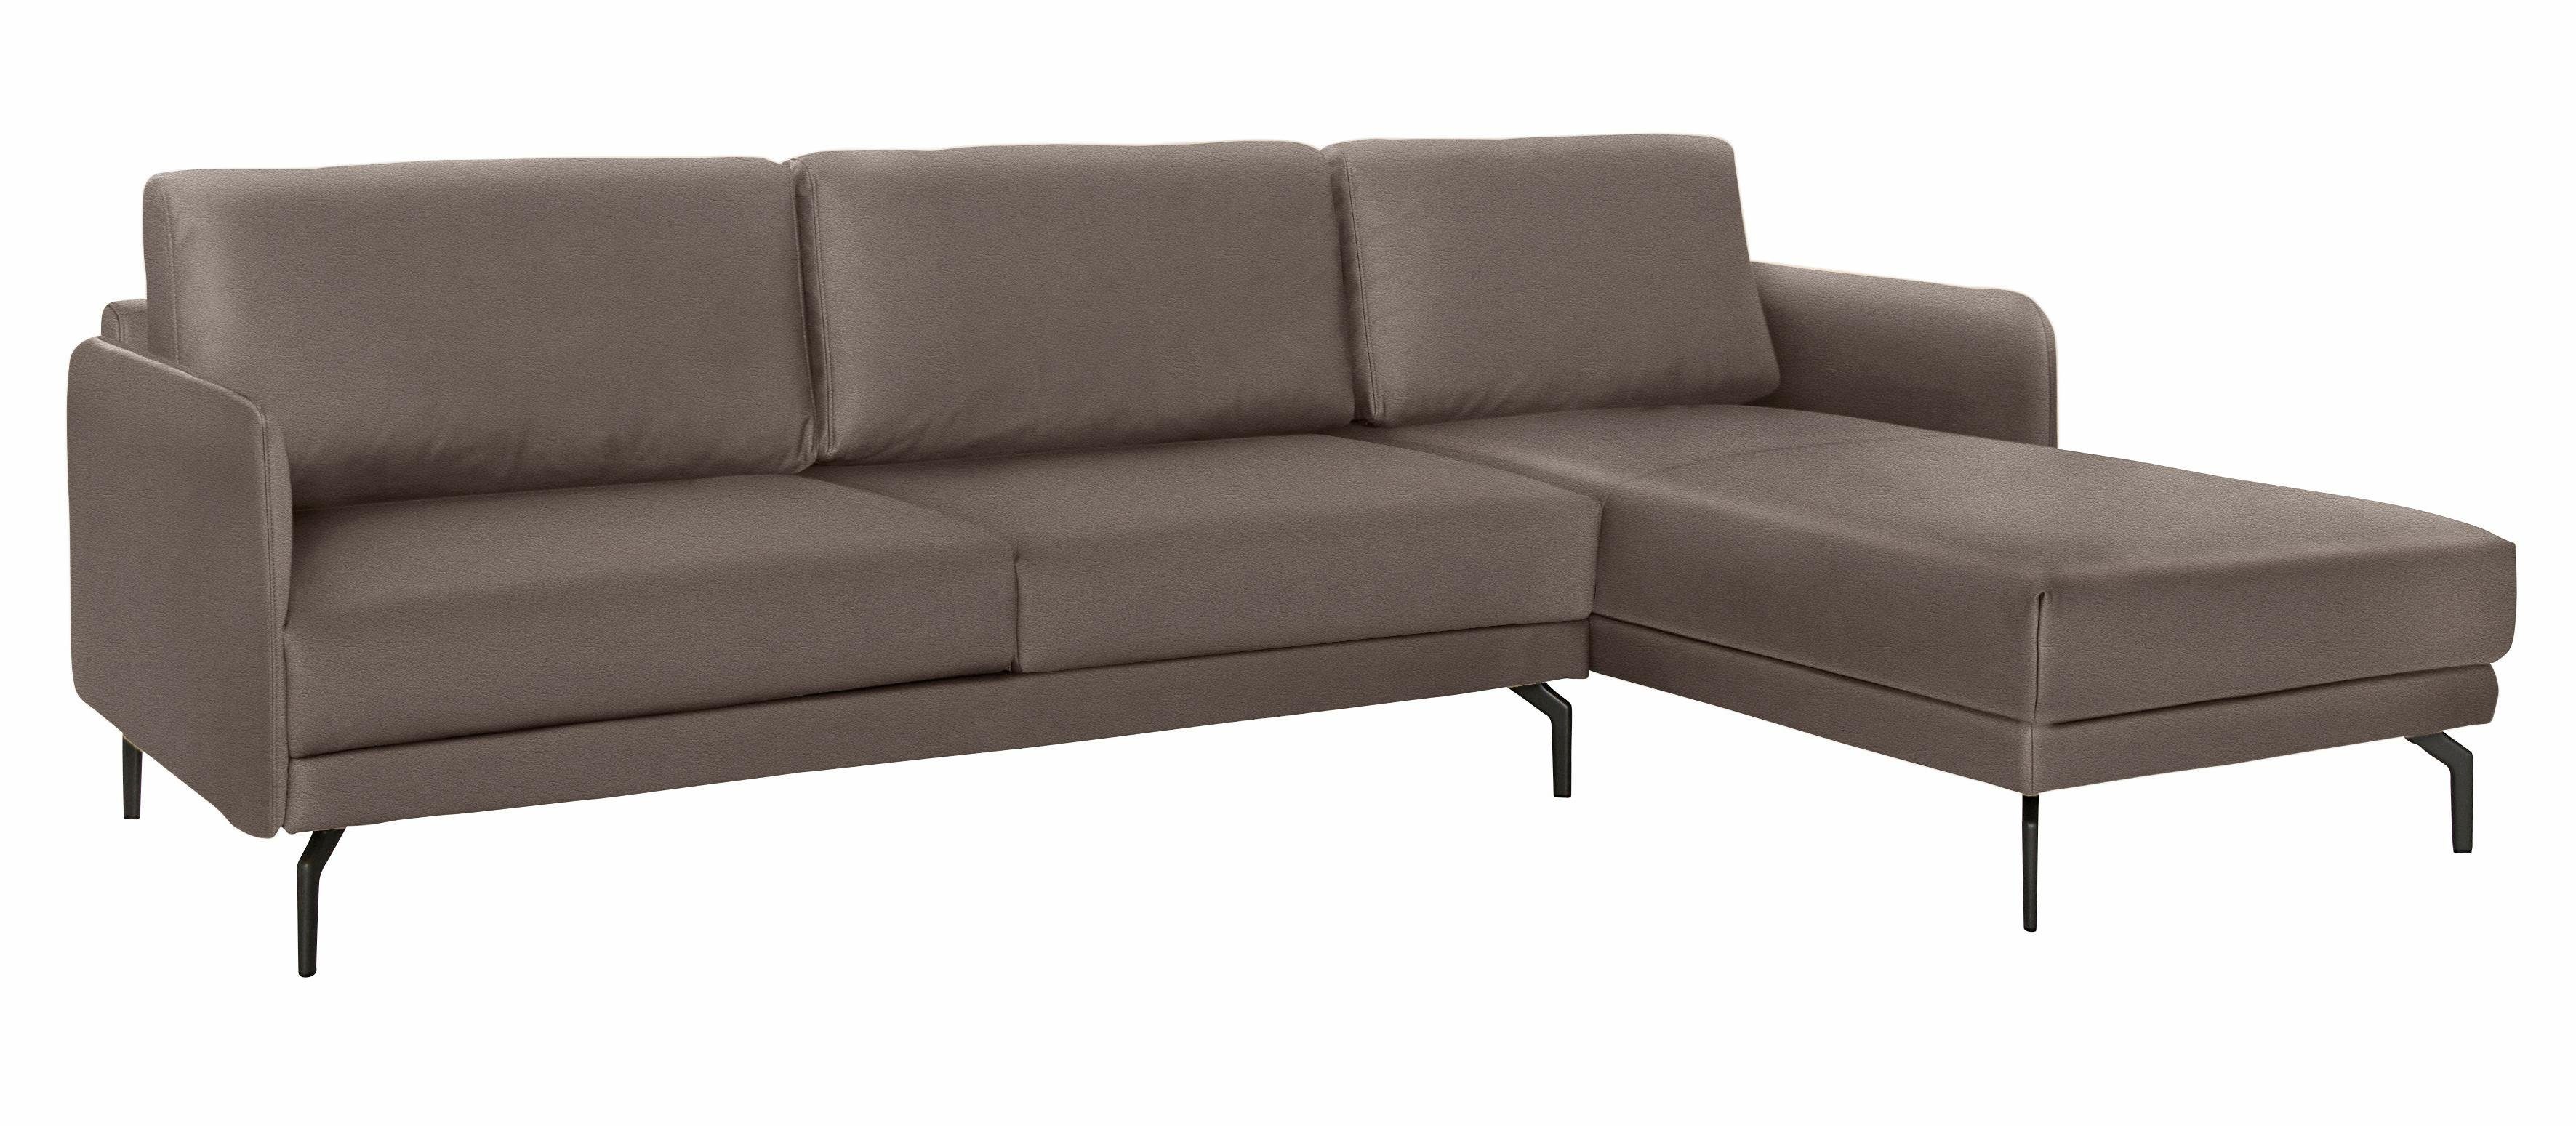 sofa Ecksofa hülsta Umbragrau sehr cm, schmal, 274 Breite Alugussfuß hs.450, Armlehne